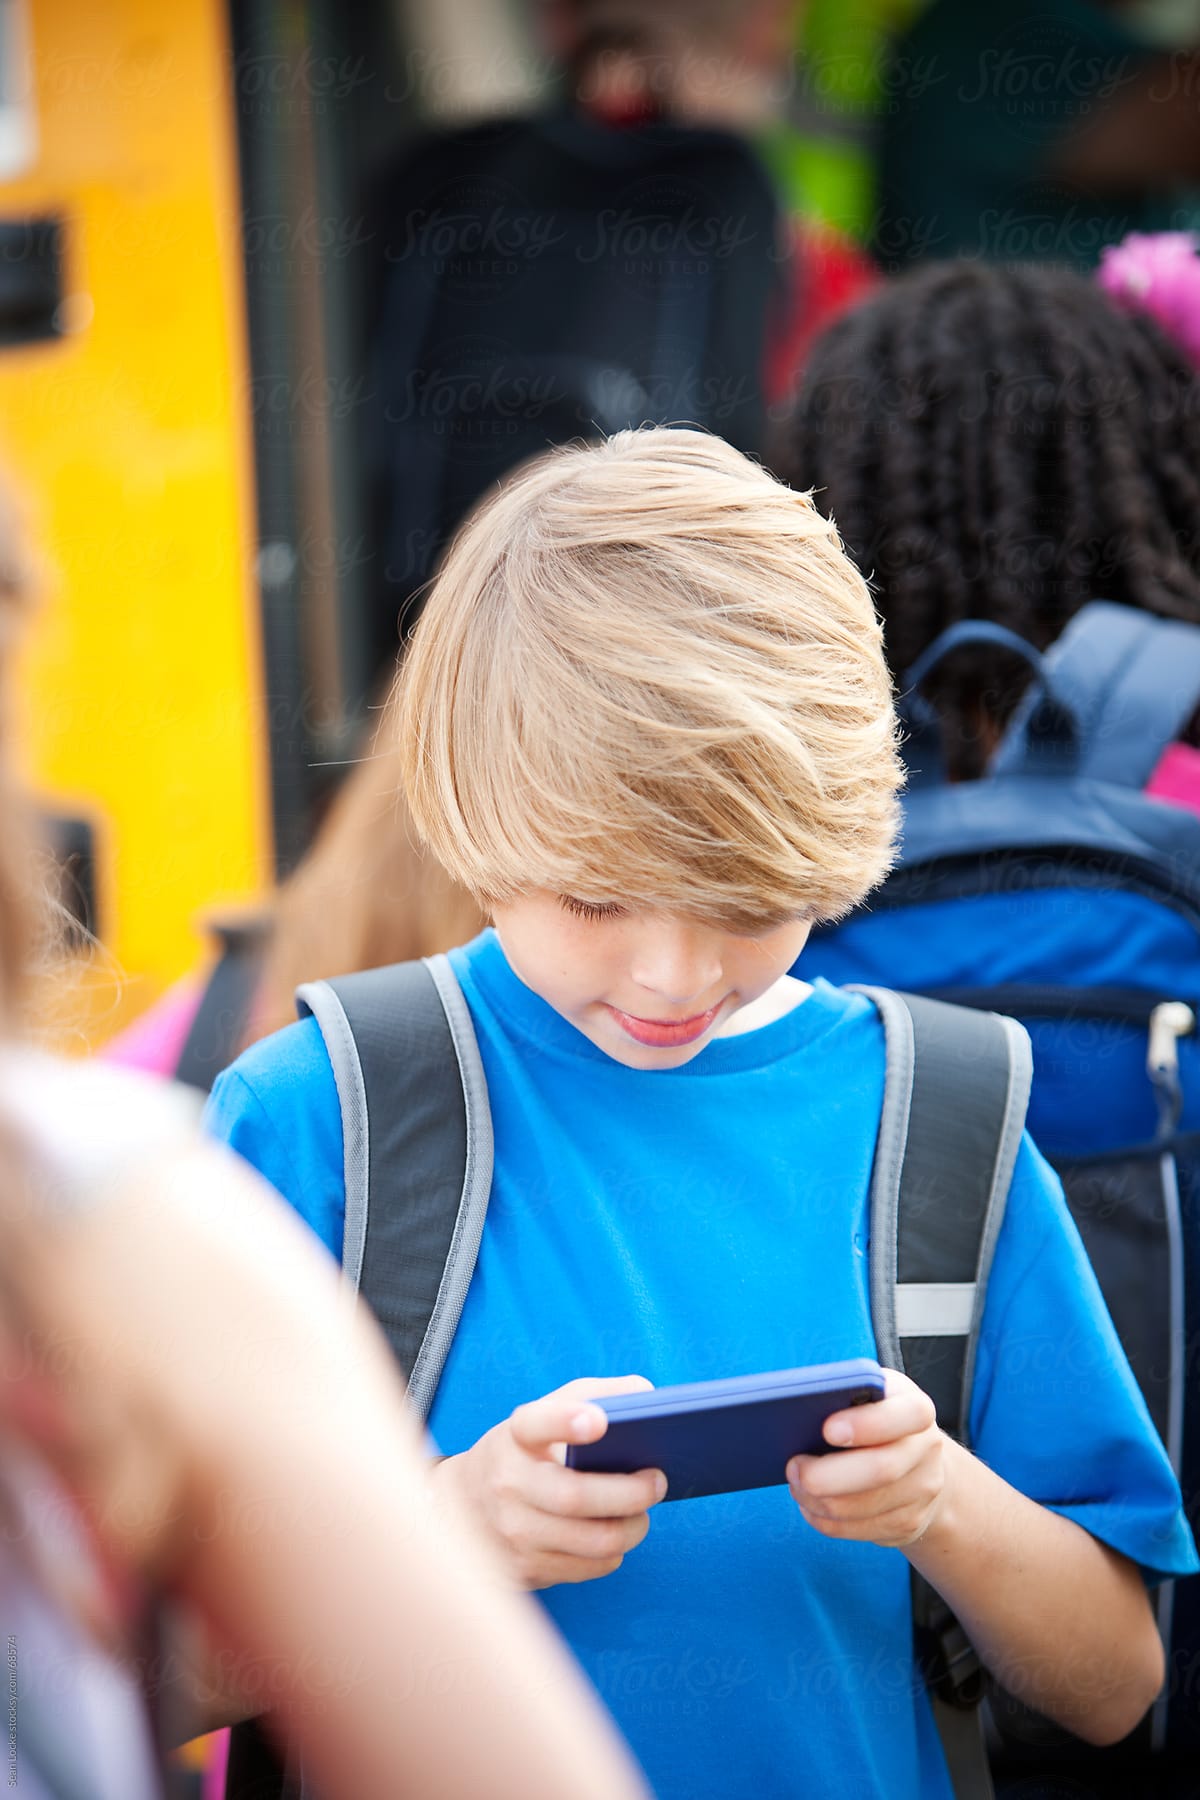 School Bus: Boy Checks Texts on Cell Phone